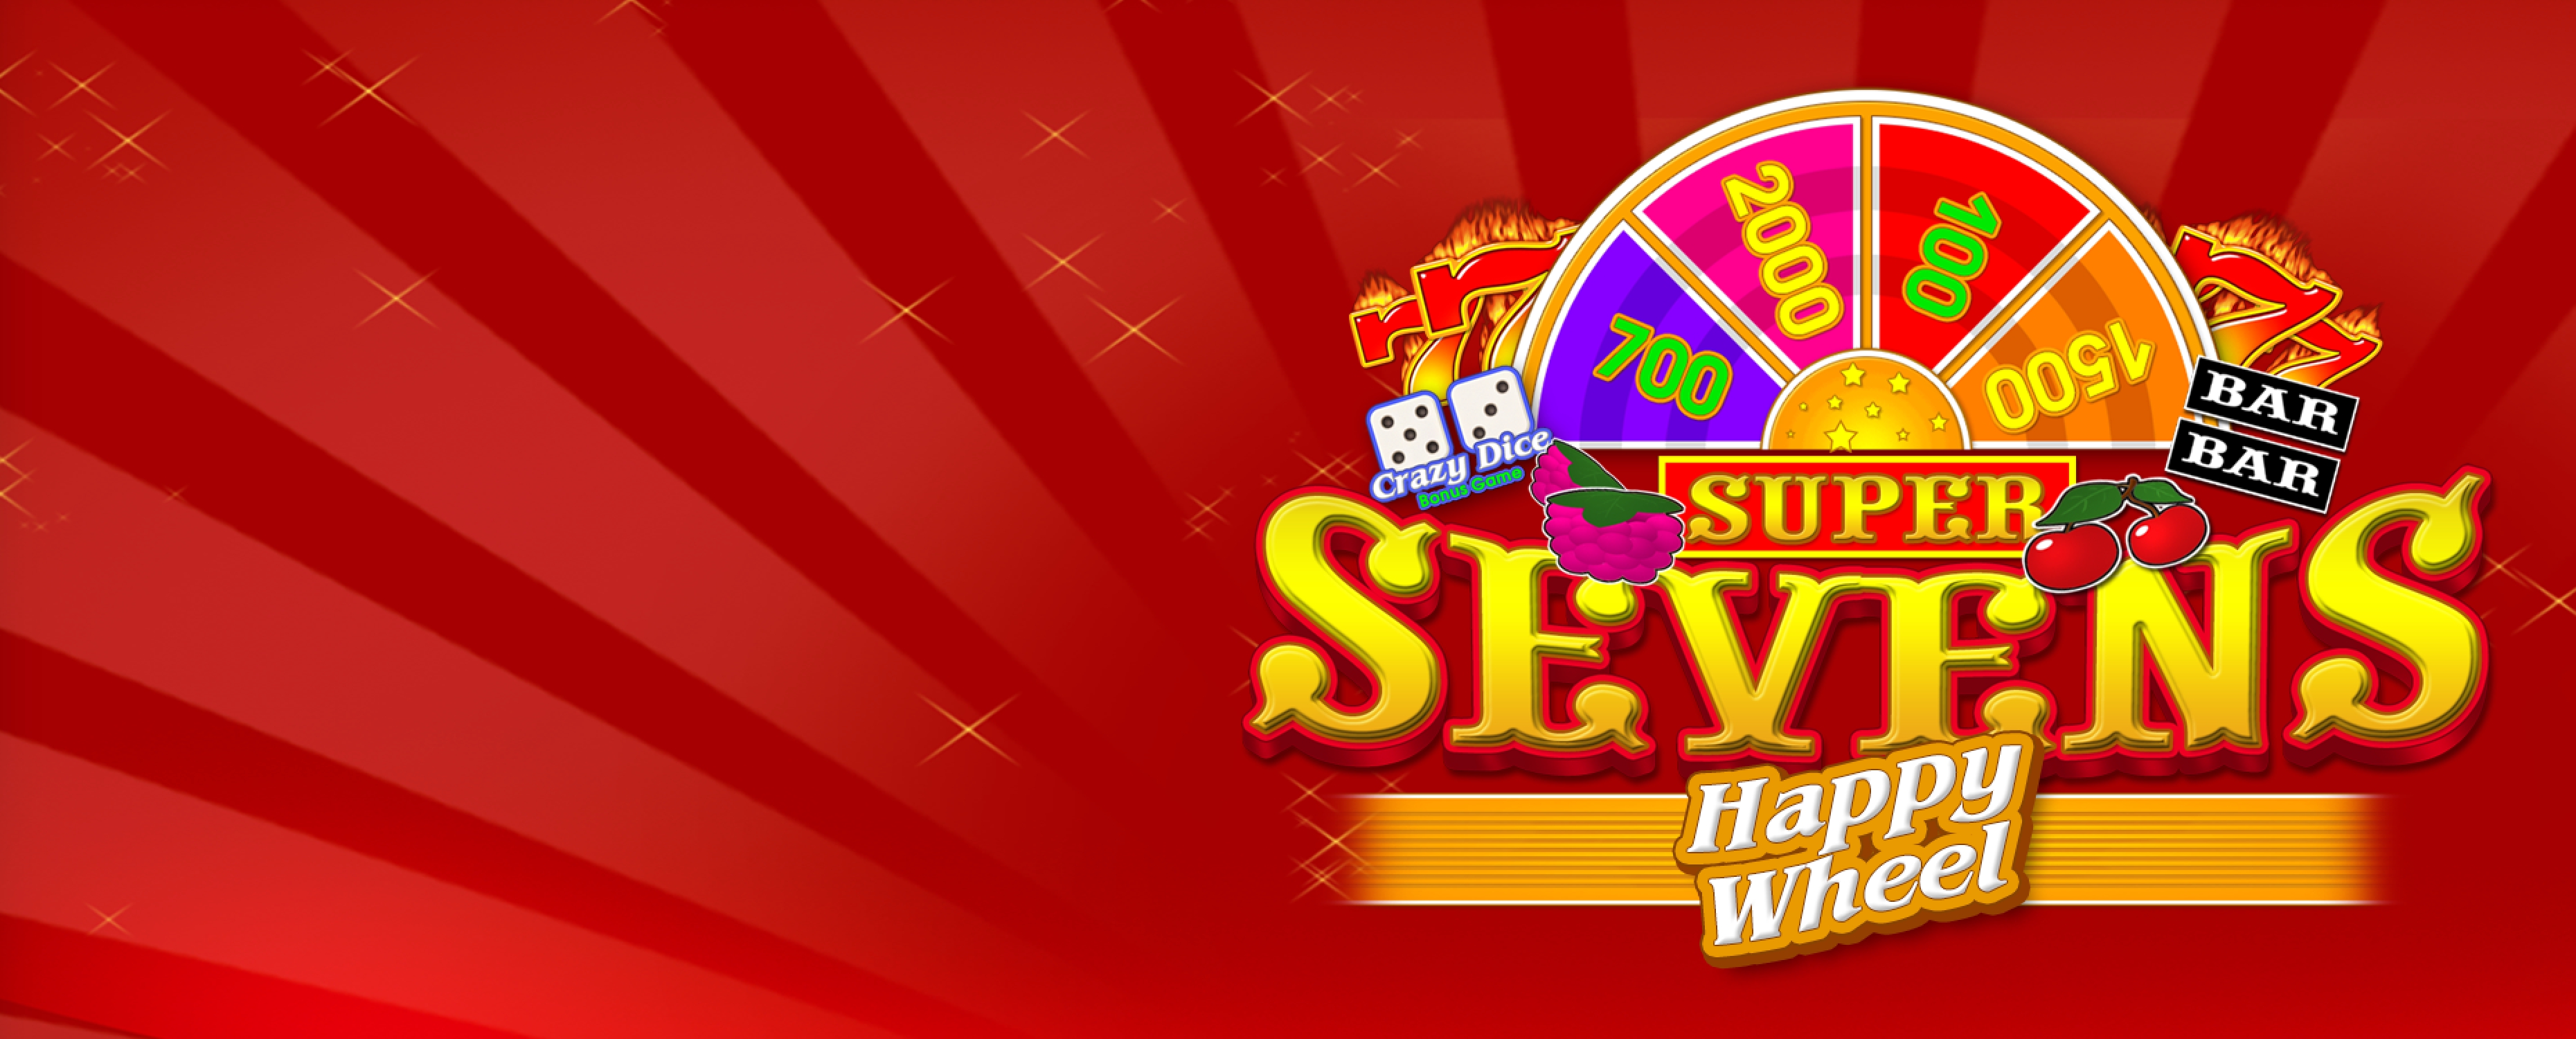 The Super Sevens Happy Wheel Online Slot Demo Game by Belatra Games